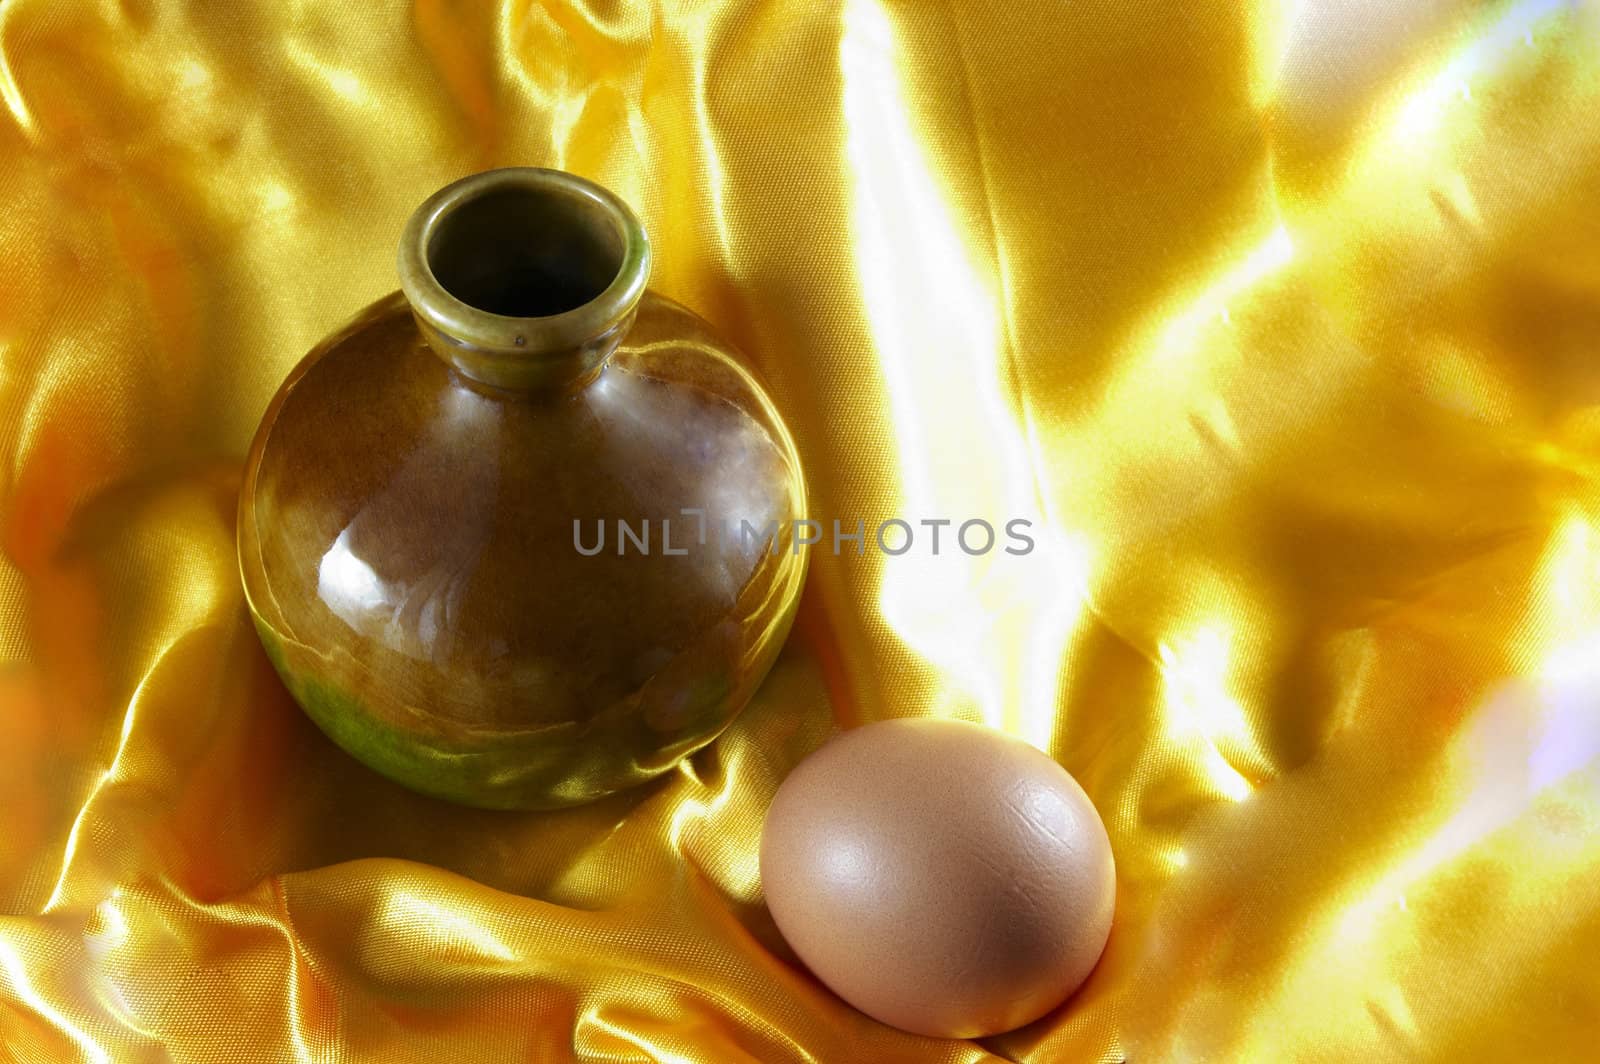 egg and old vase